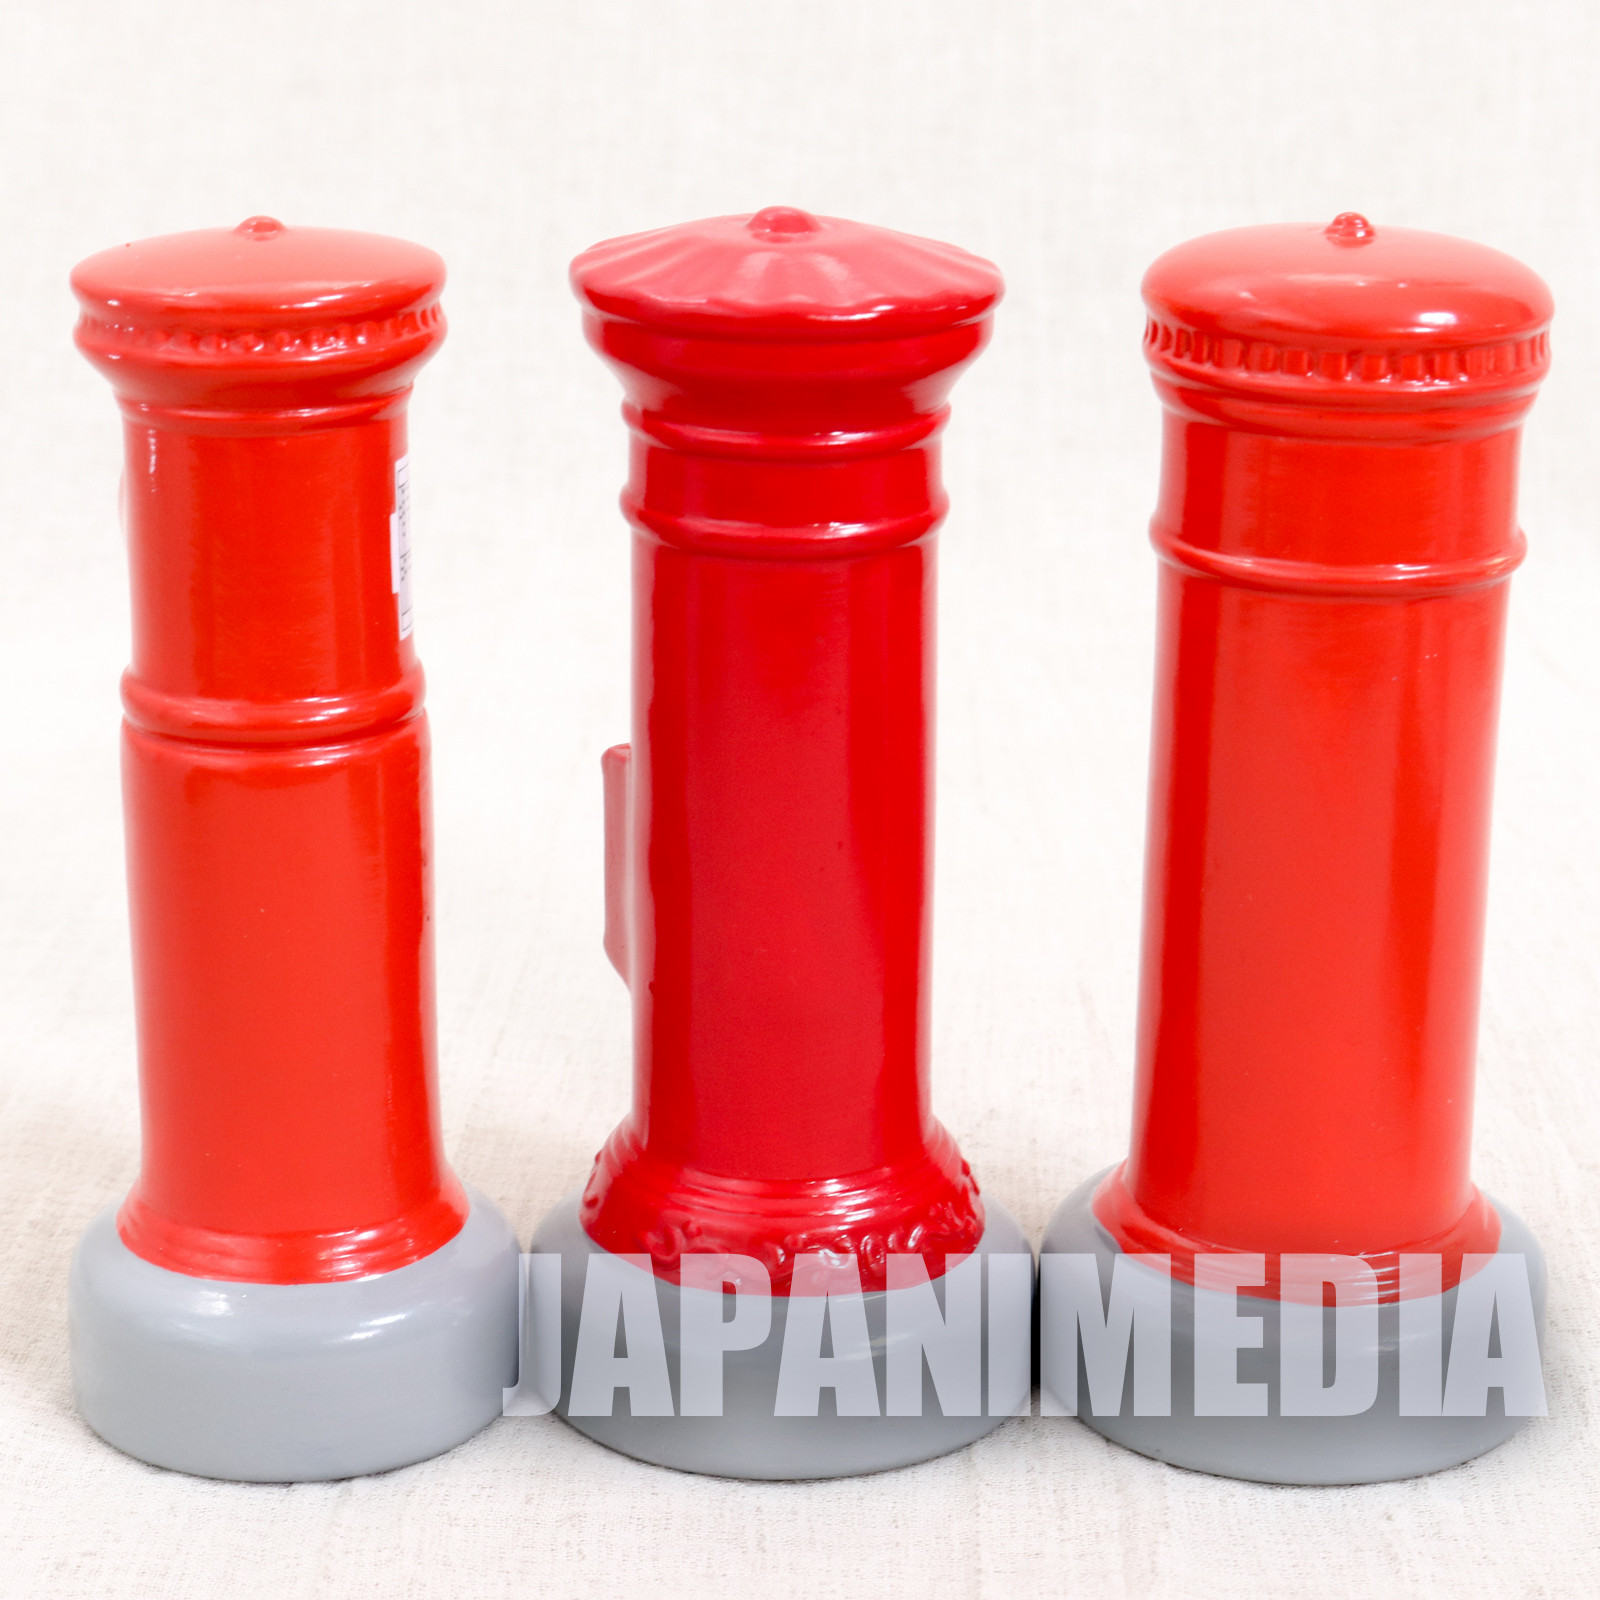 Japan Post Miniature Collection Figure 6pc Set 2005 World Expostion